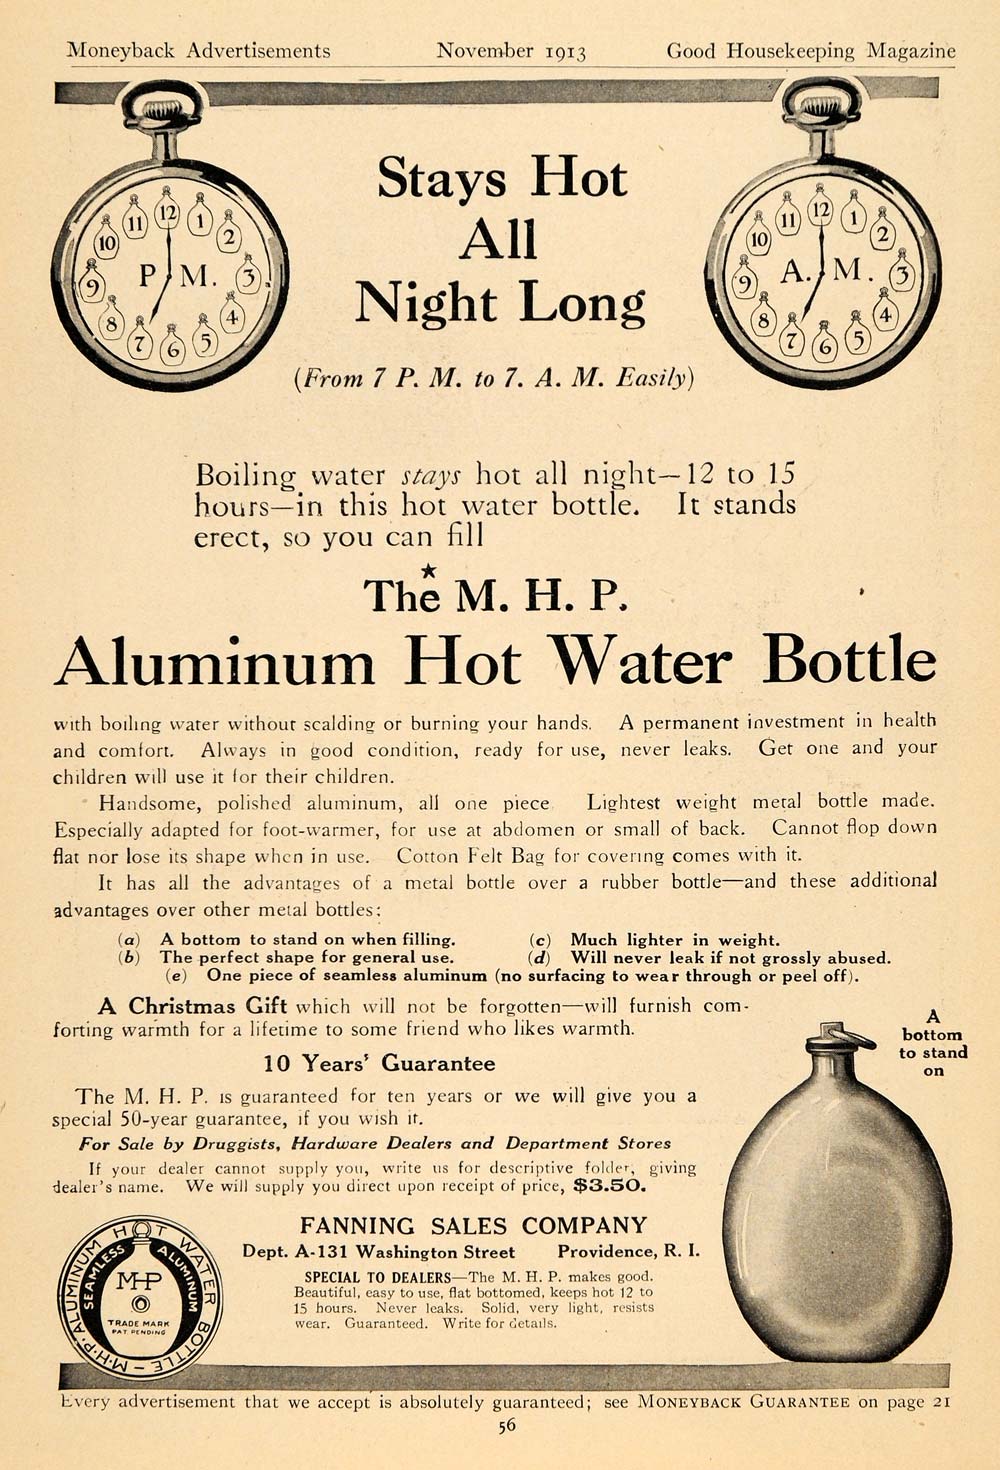 1913 Ad Fanning Sales Co. Aluminum Hot Water Bottle - ORIGINAL ADVERTISING GH3